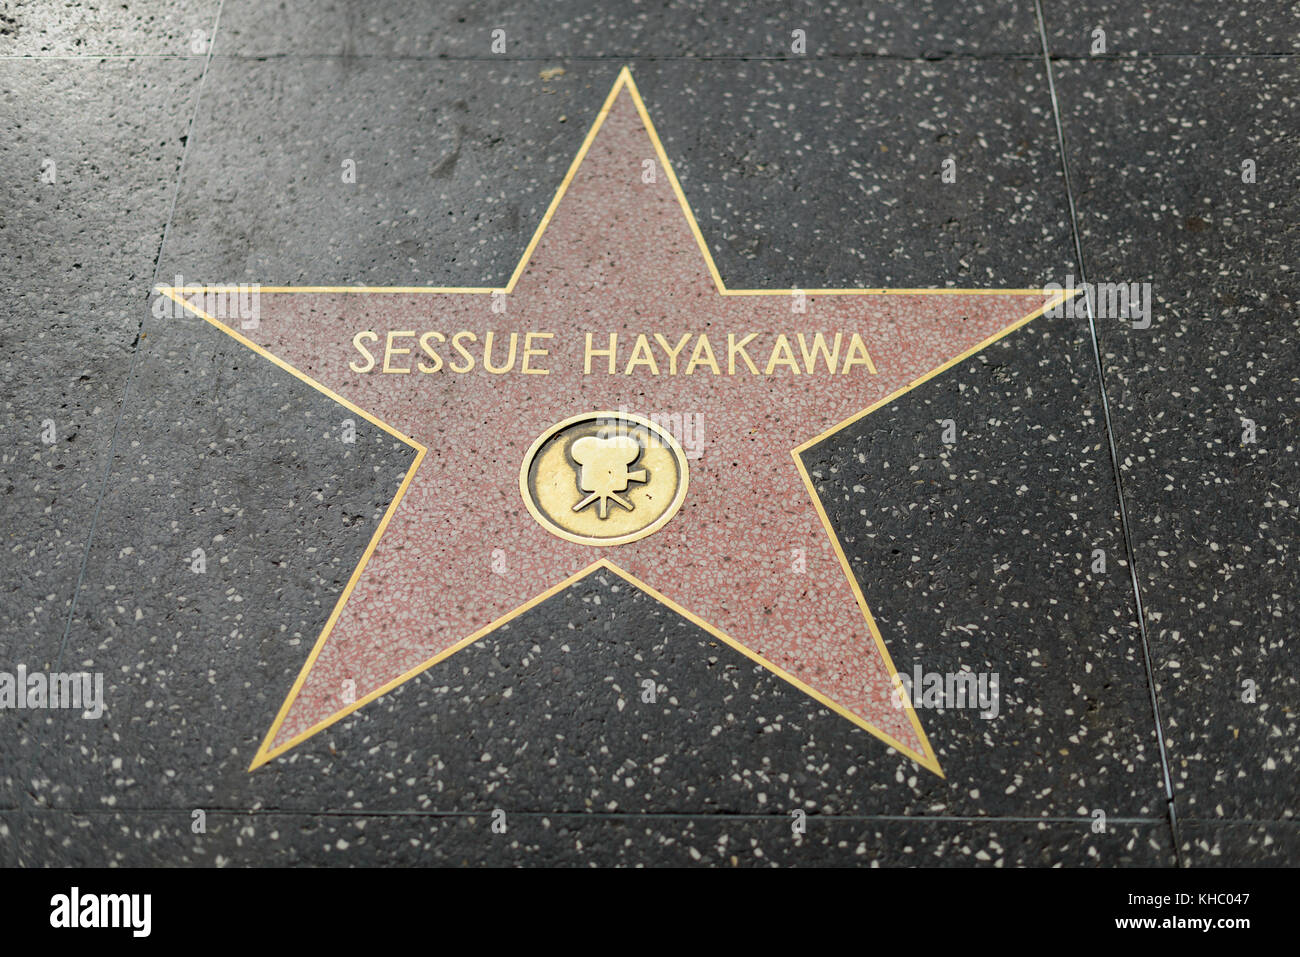 HOLLYWOOD, CA - DEZEMBER 06: Sessue Hayakawa Star auf dem Hollywood Walk of Fame in Hollywood, Kalifornien am 6. Dezember 2016. Stockfoto